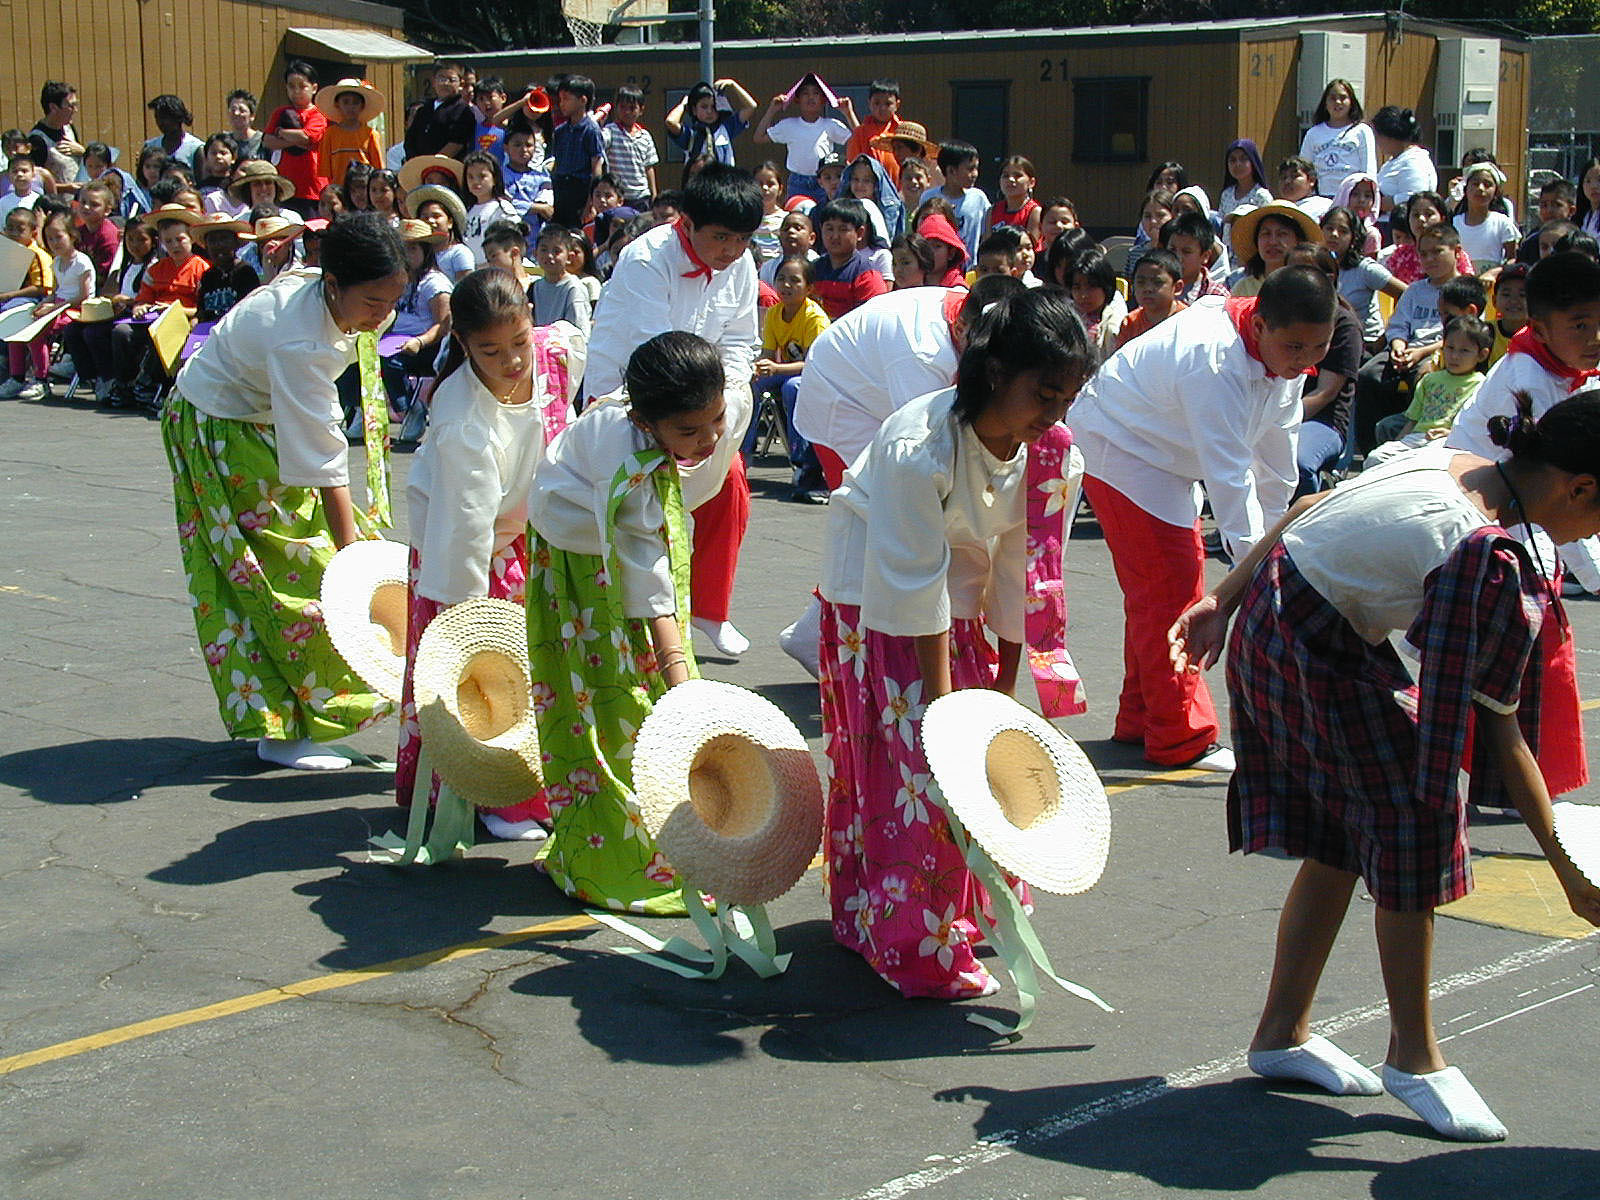 Students participate in a Filipino Hat Dance